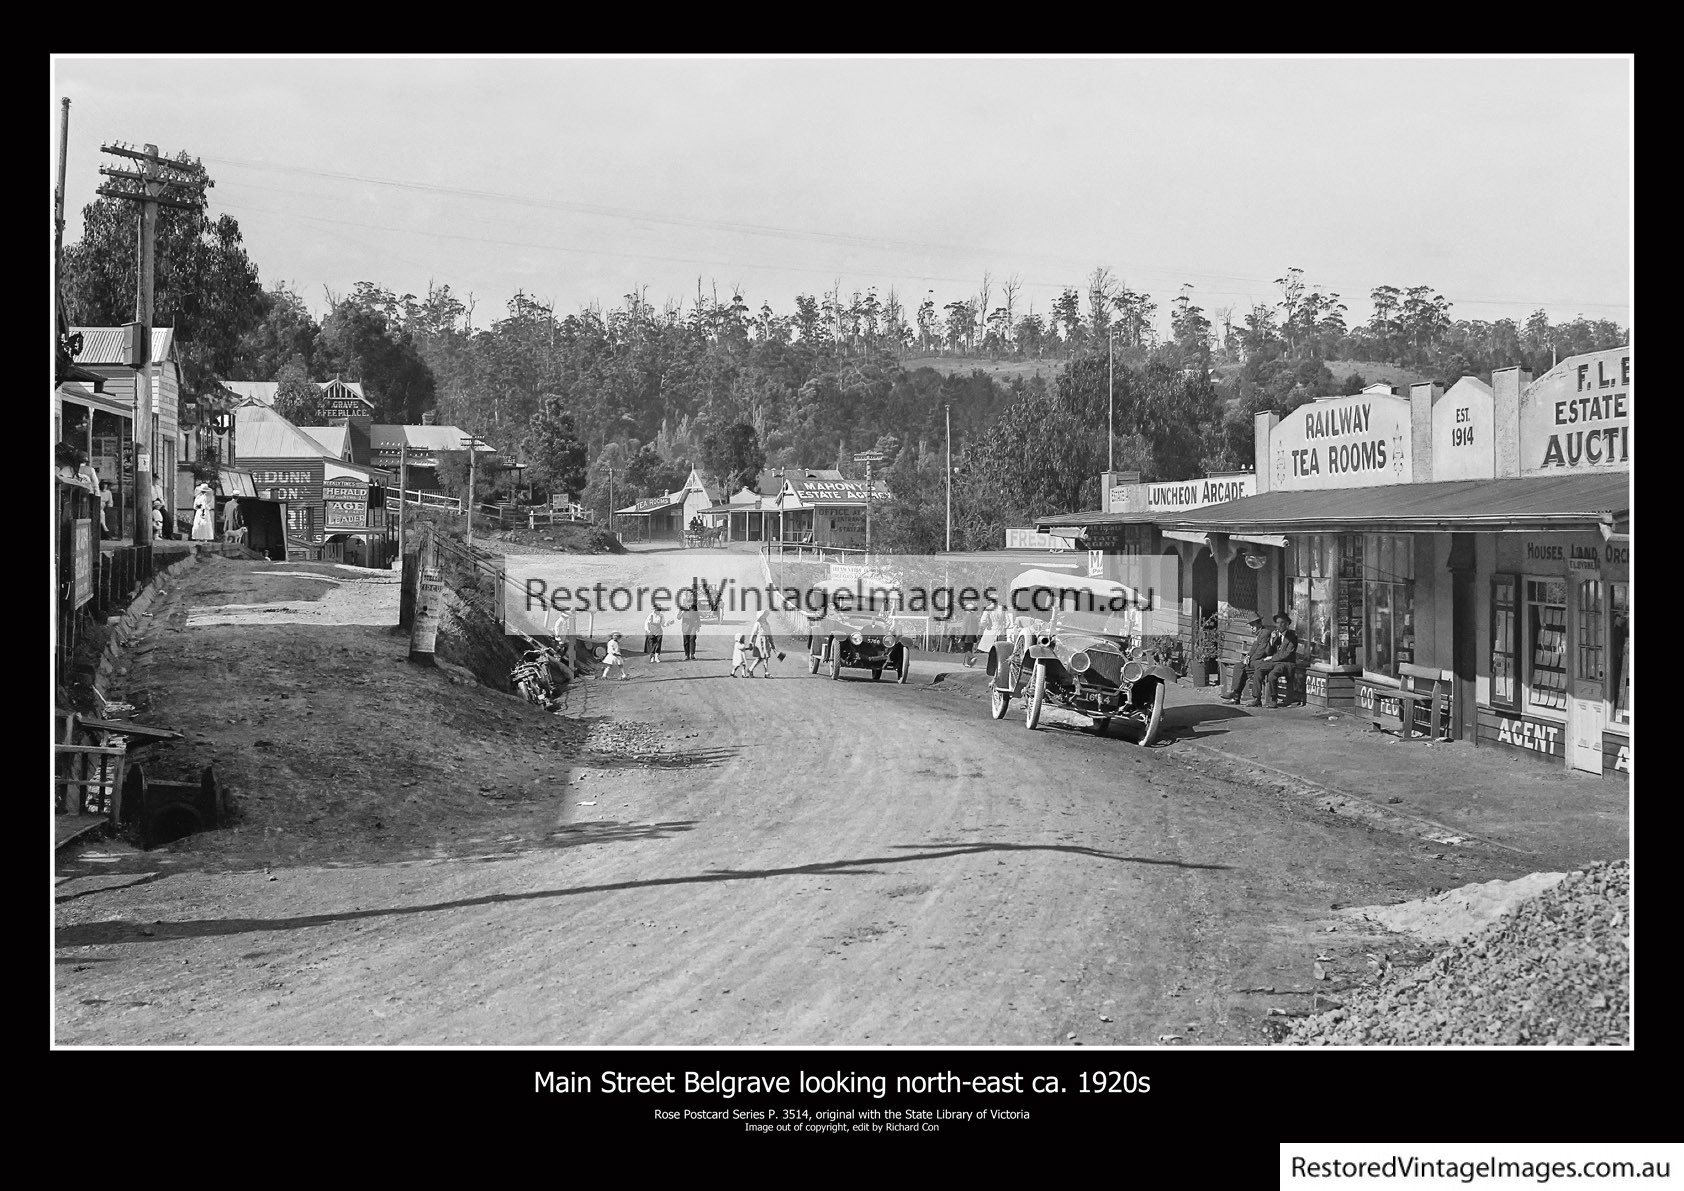 Main Street Belgrave Ca. 1920’s